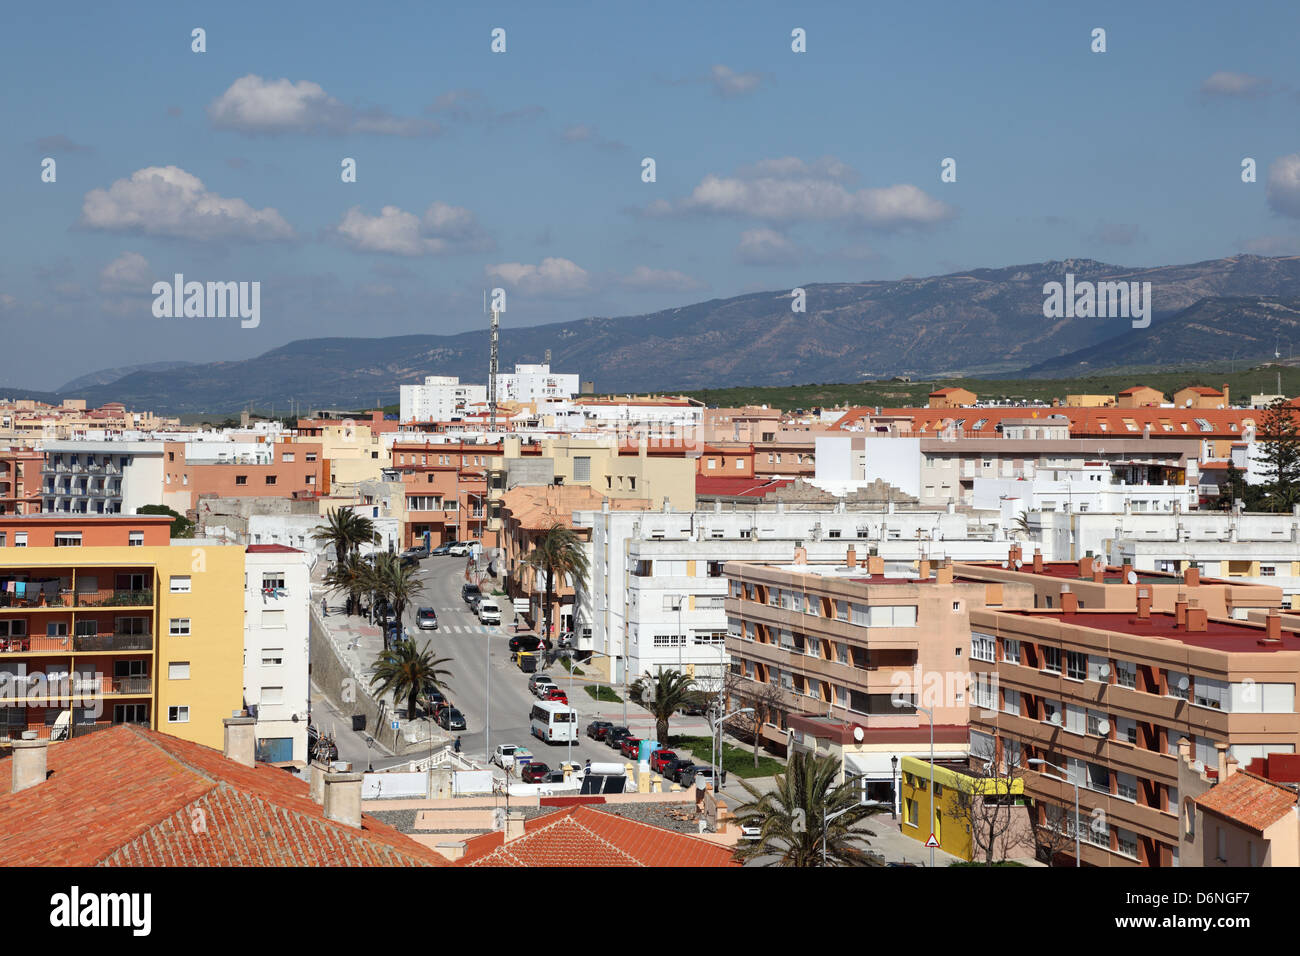 City street in Tarifa, Province of Cadiz, Andalusia Spain Stock Photo